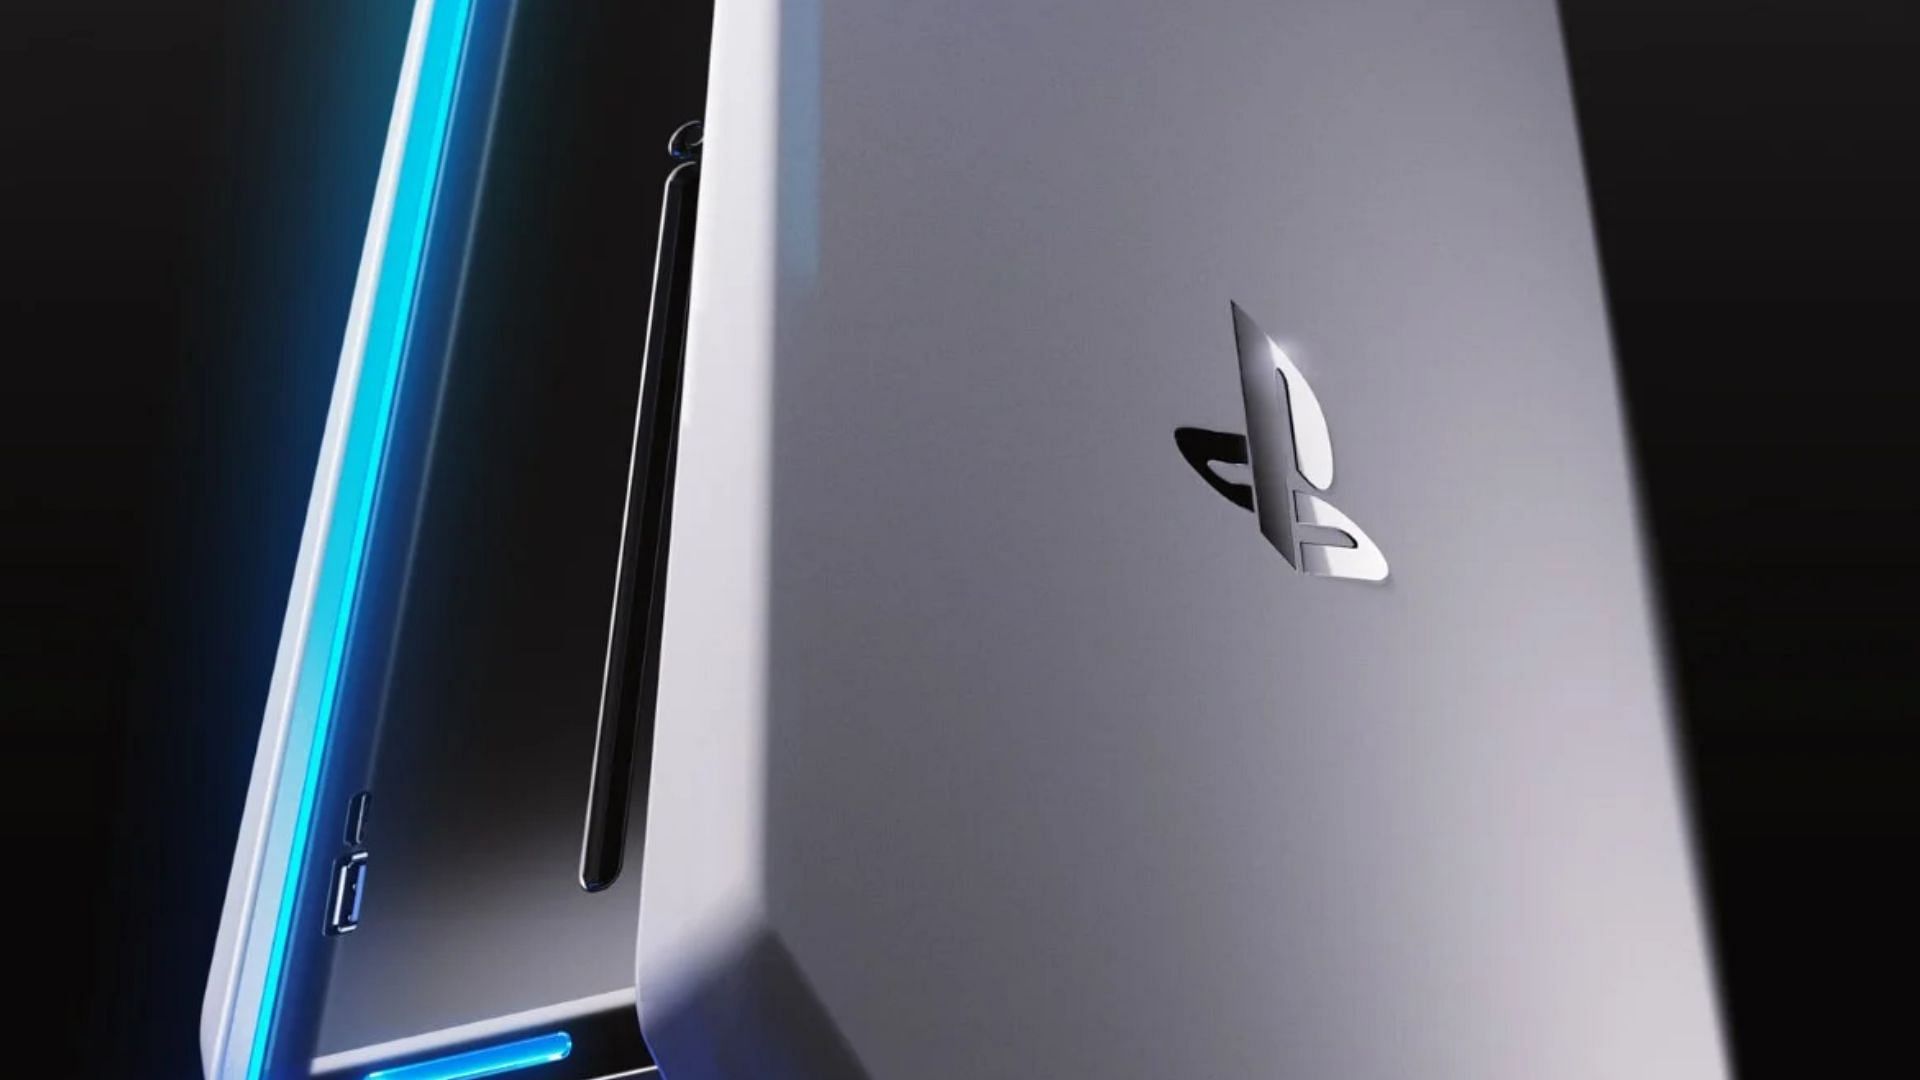 New PS5 Pro Leak Reveals Much Faster CPU & GPU Are Coming